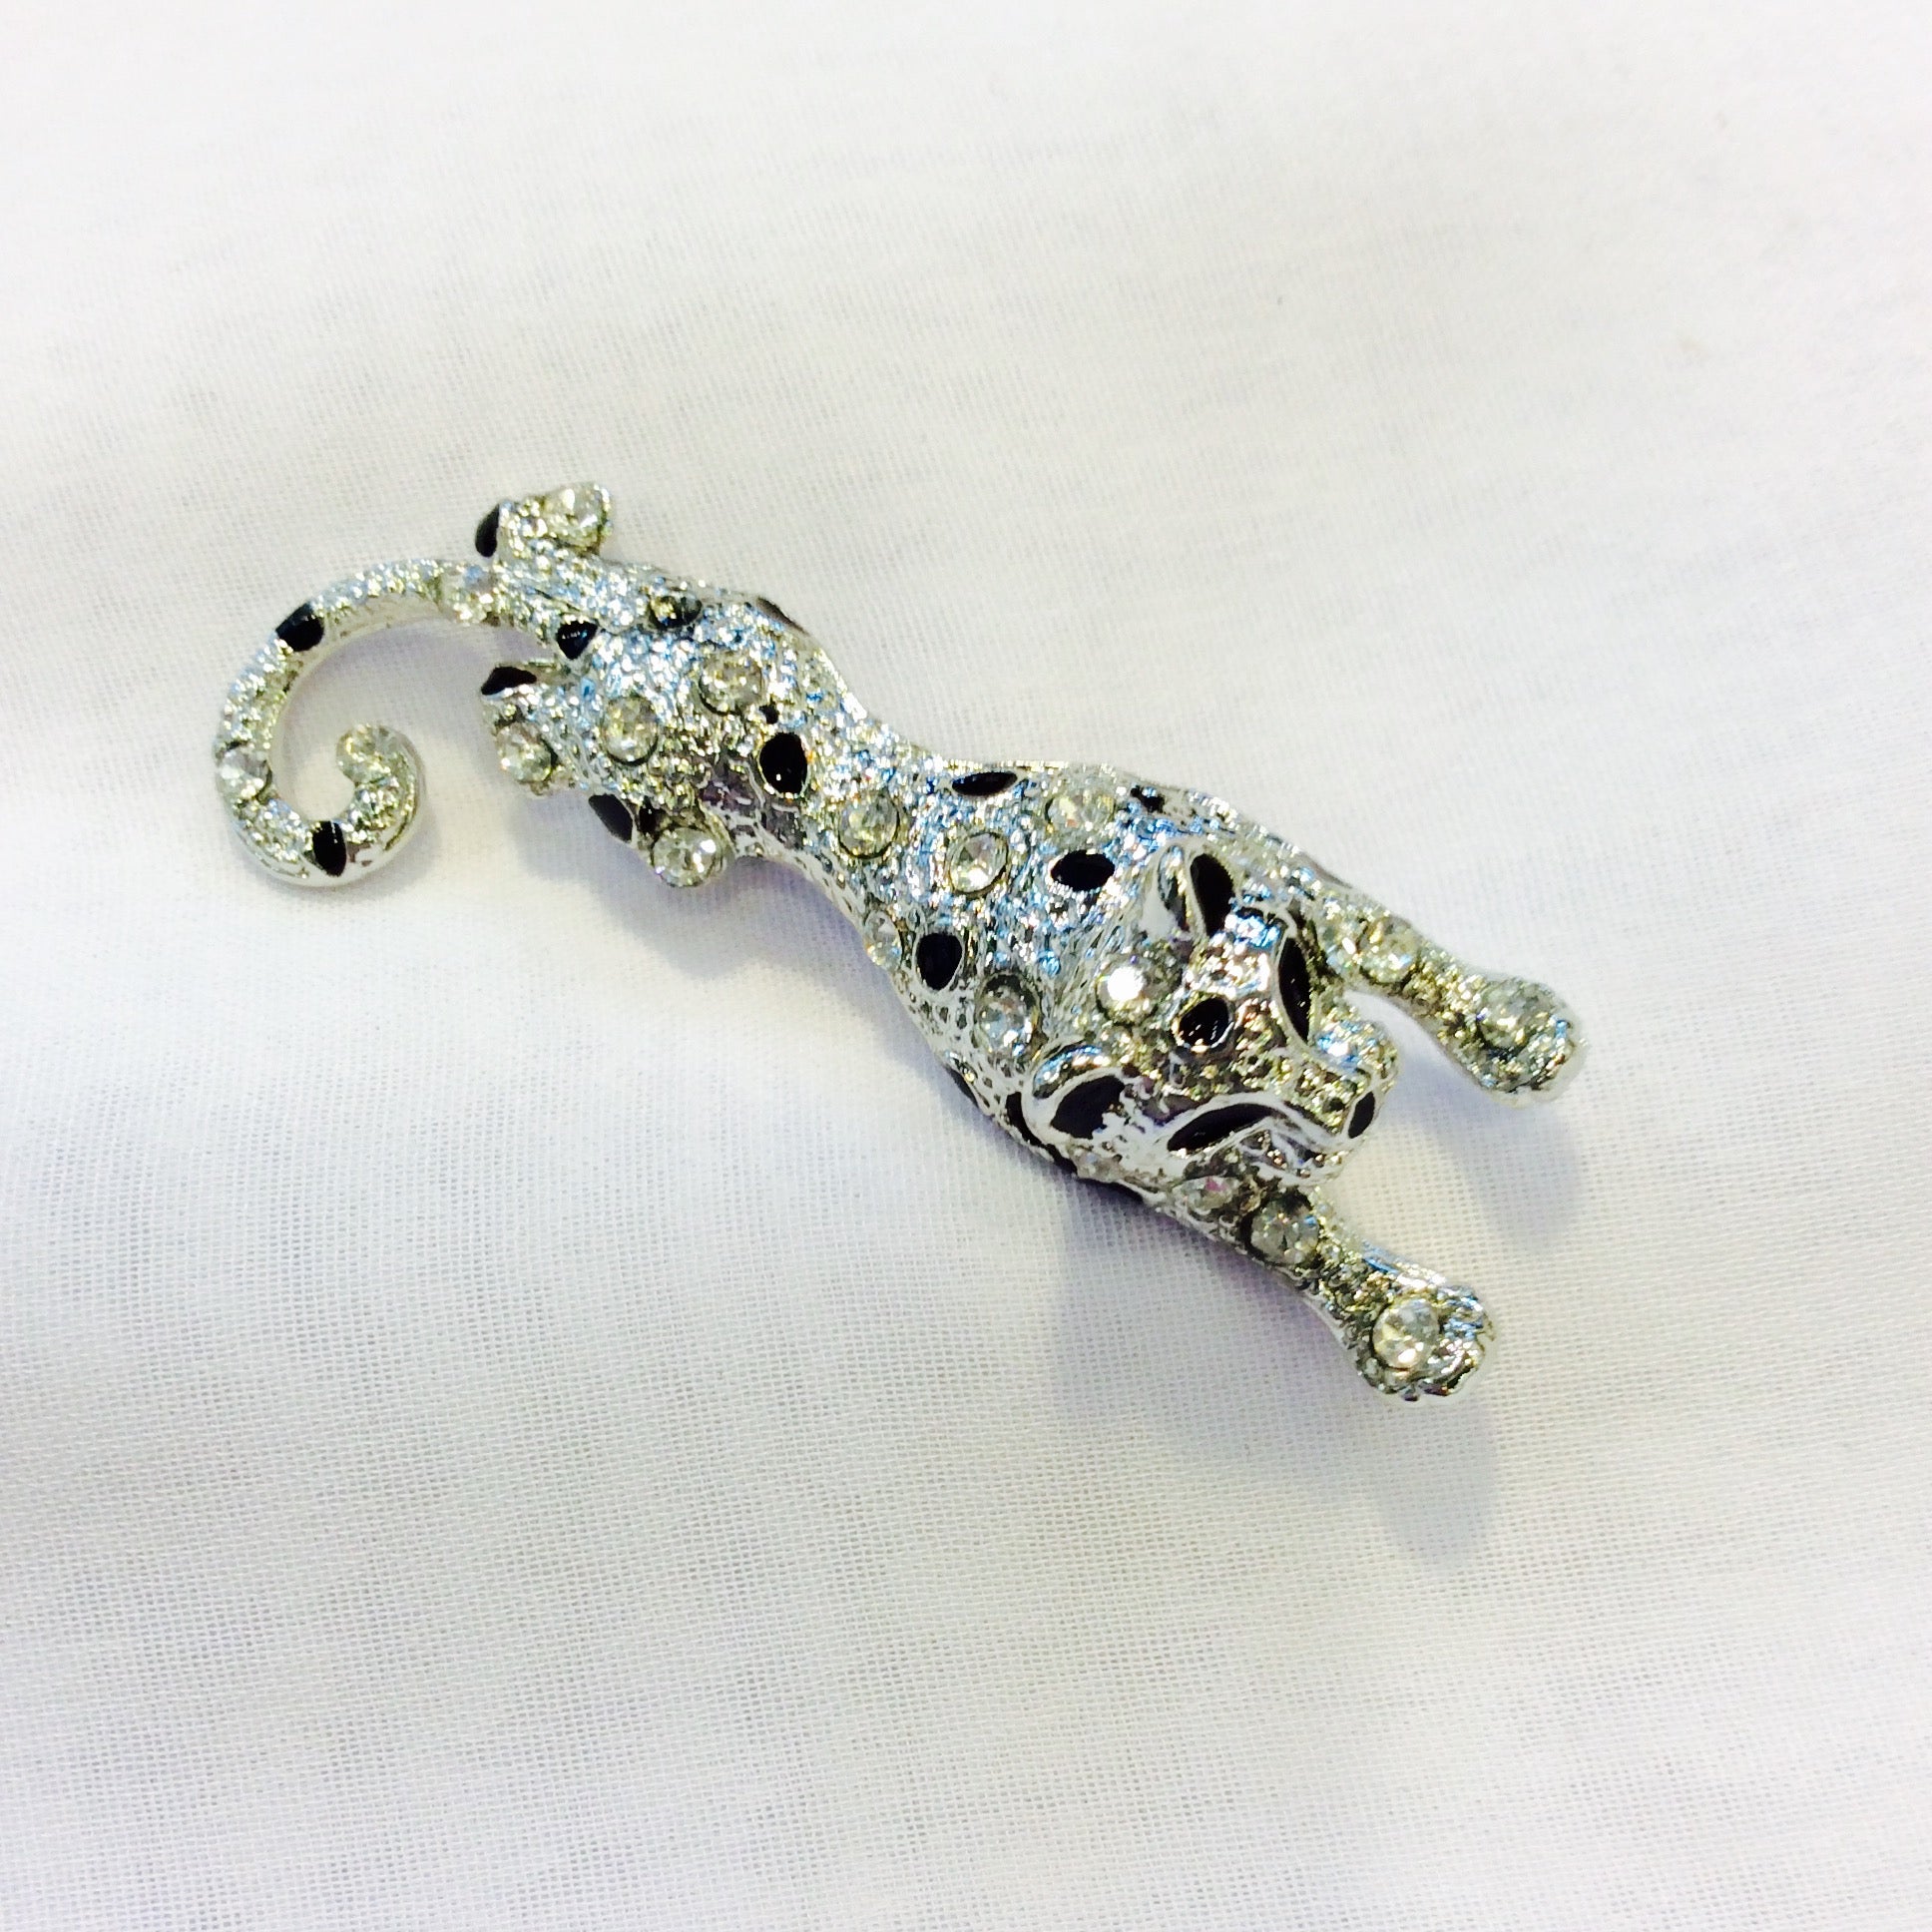 Small Jaguar Pin #47-6405